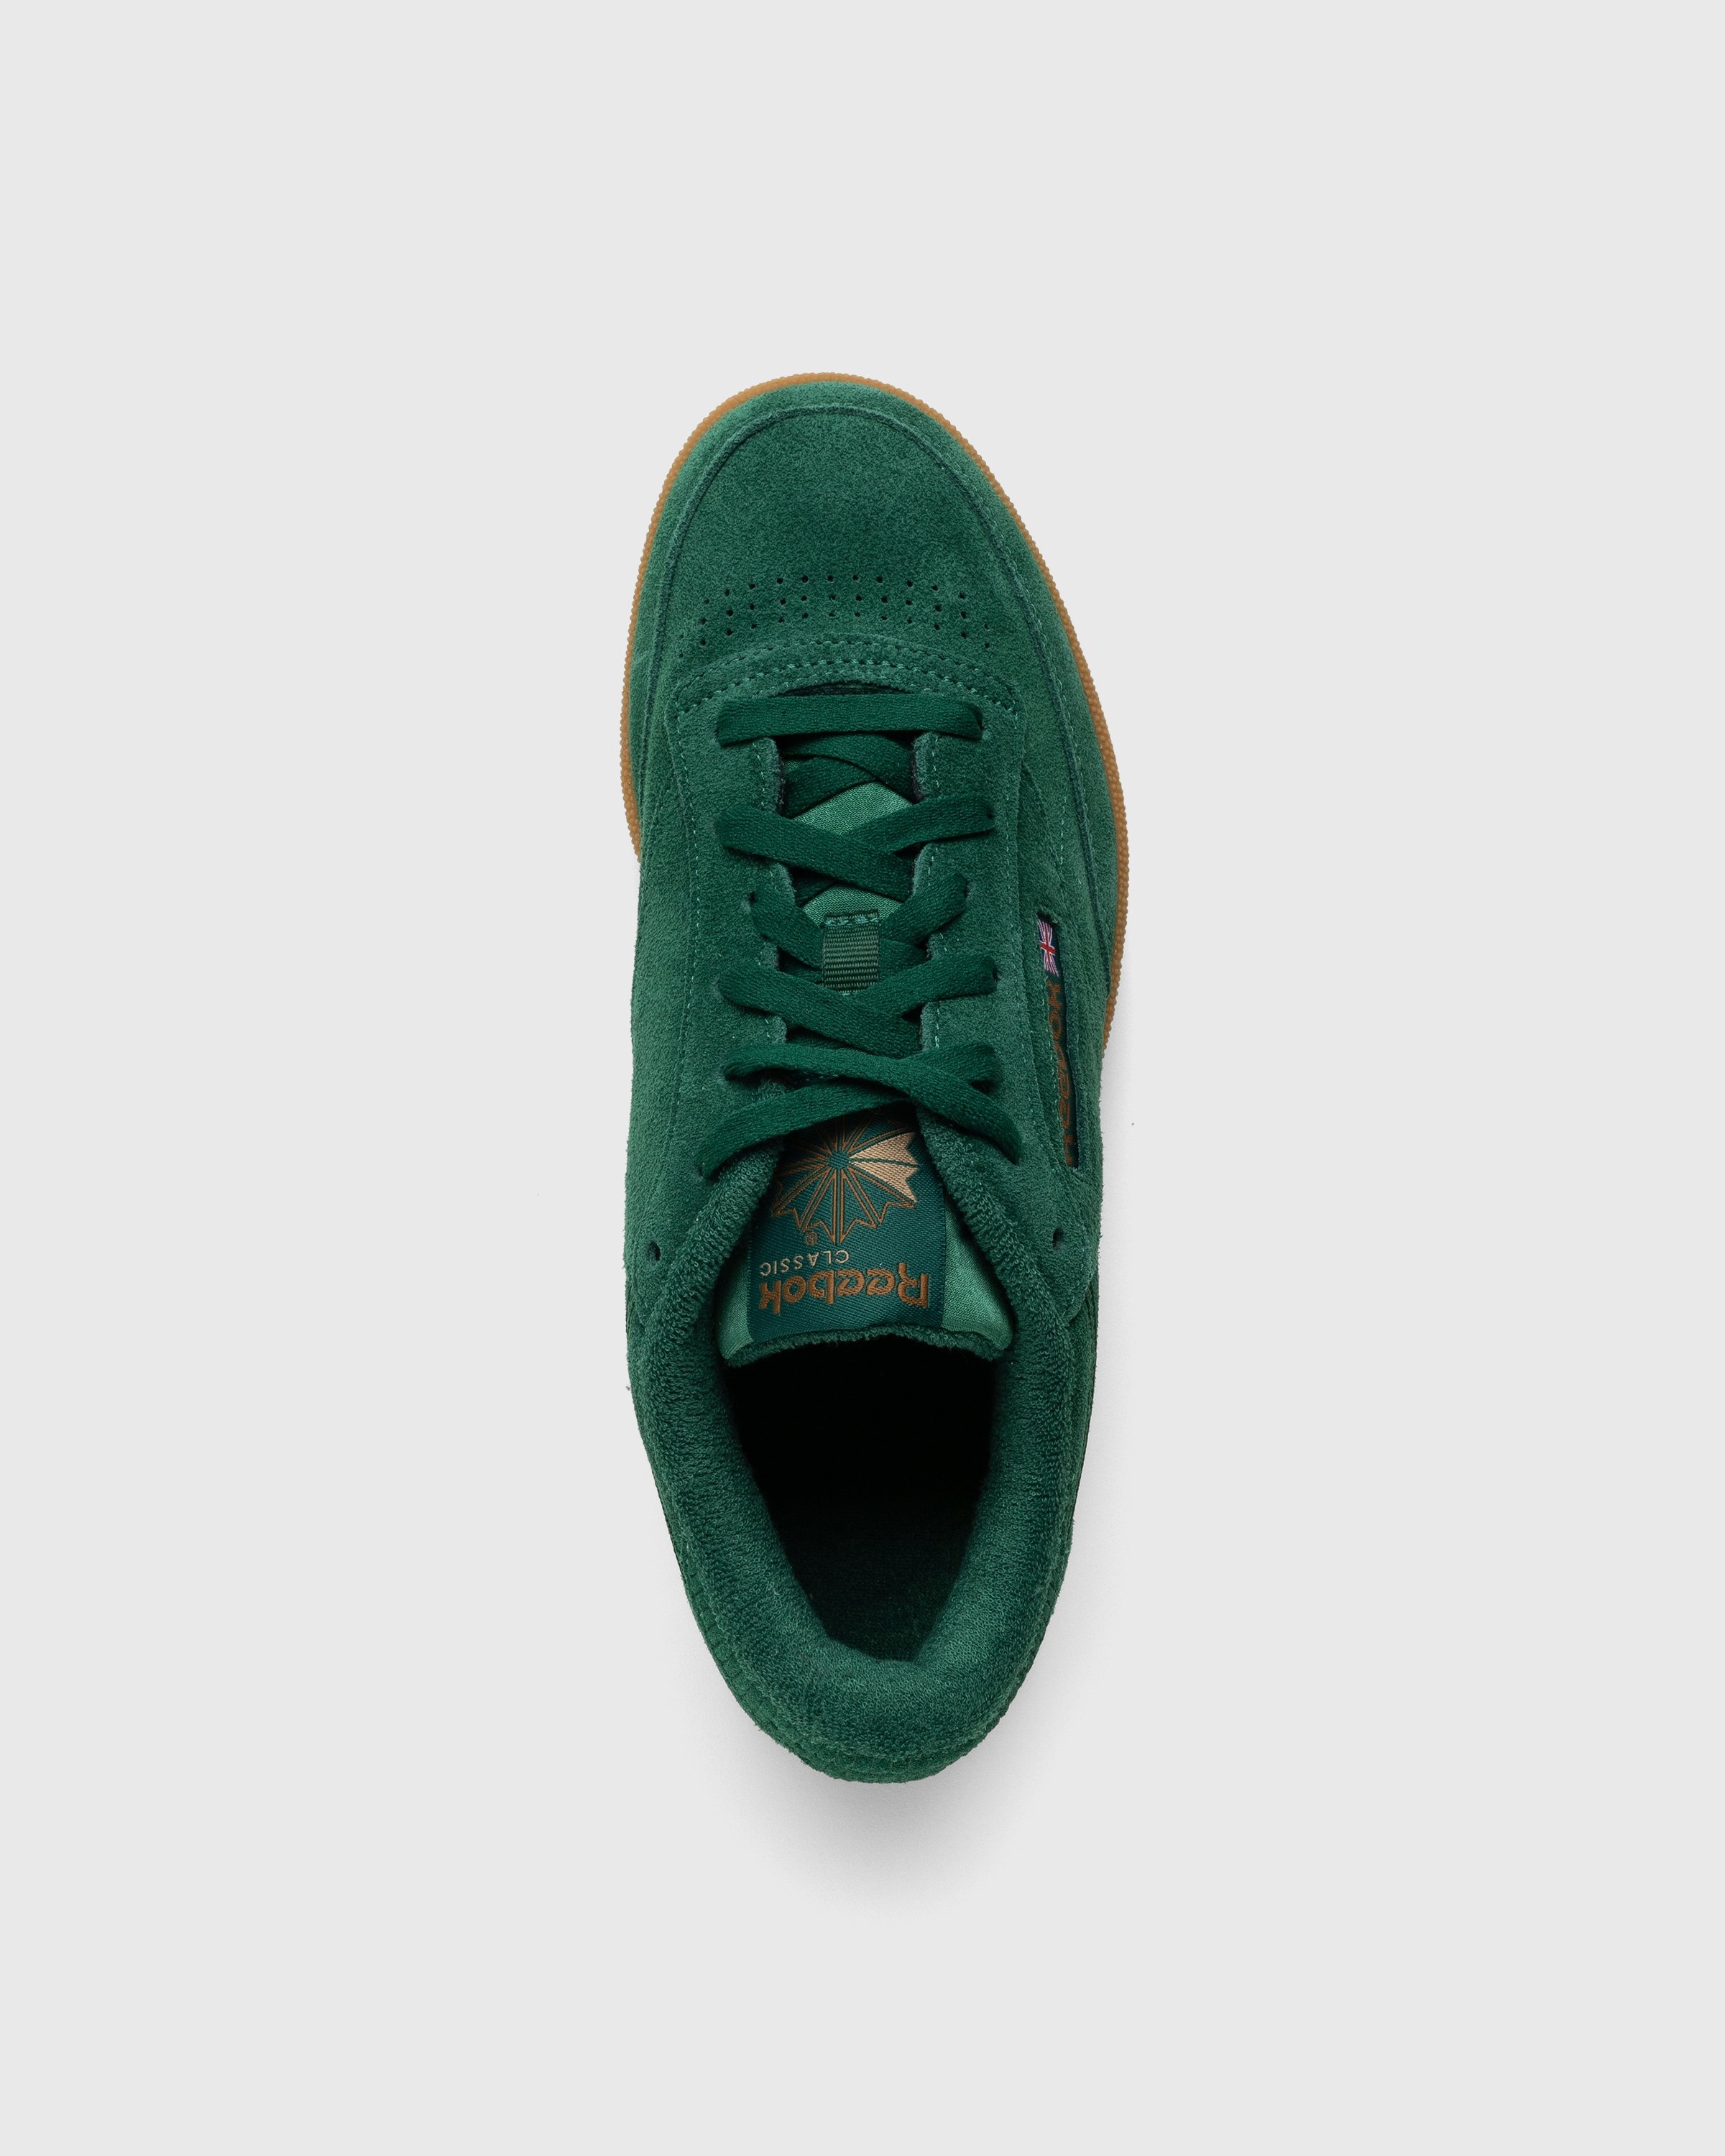 Reebok – Club C 85 Green - Low Top Sneakers - Green - Image 5